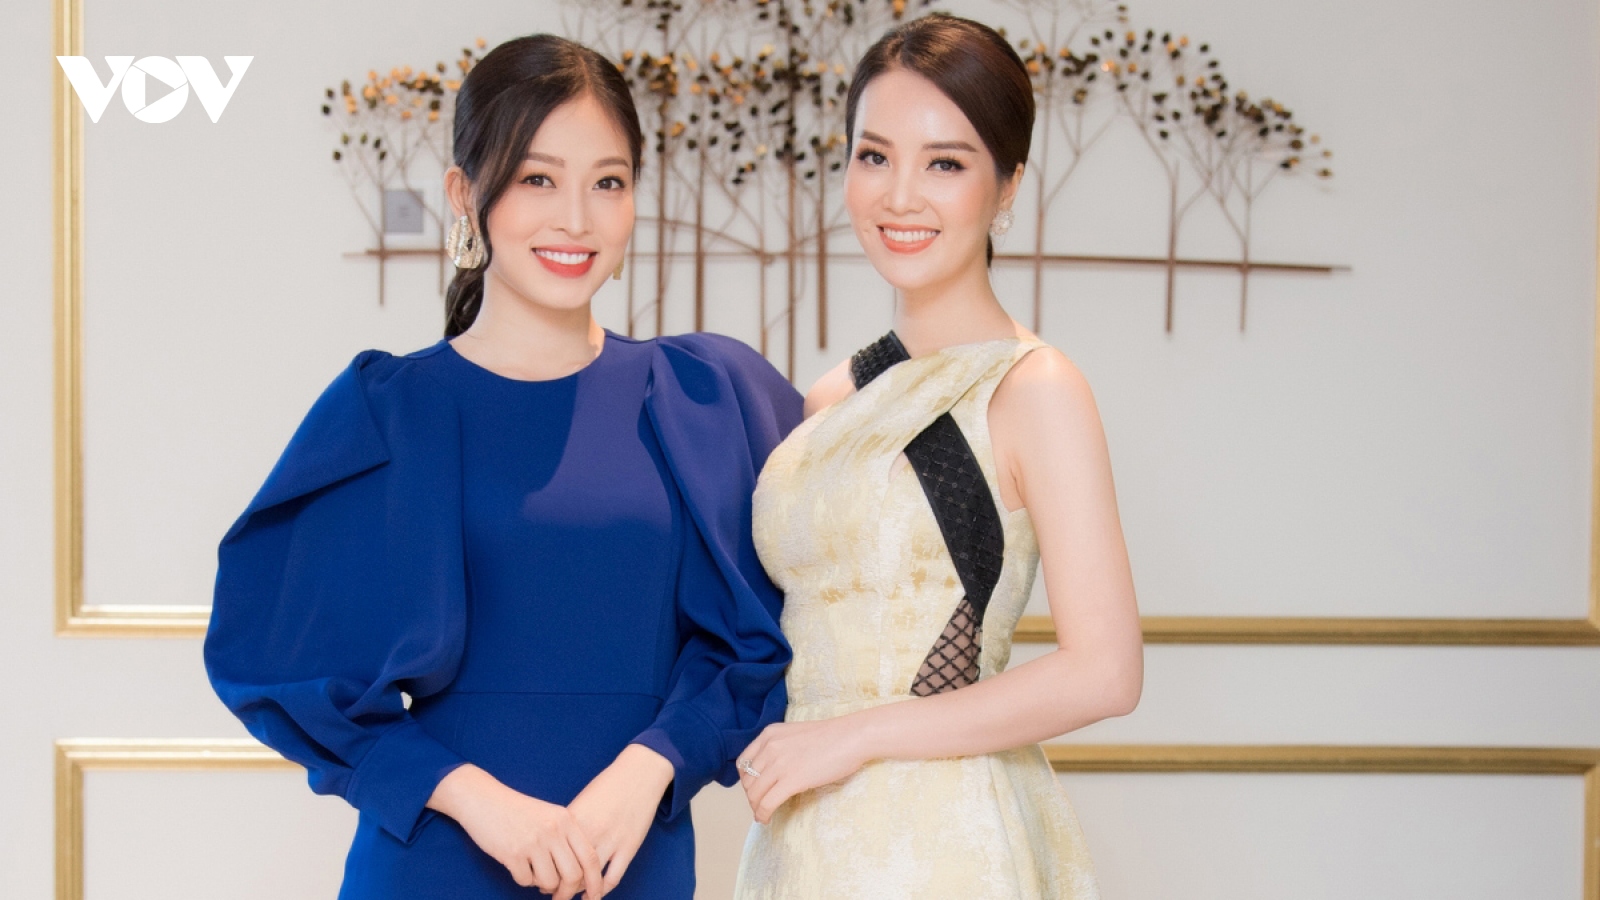 Beauty queens hold press briefing ahead of Miss Vietnam 2020 semi-finals